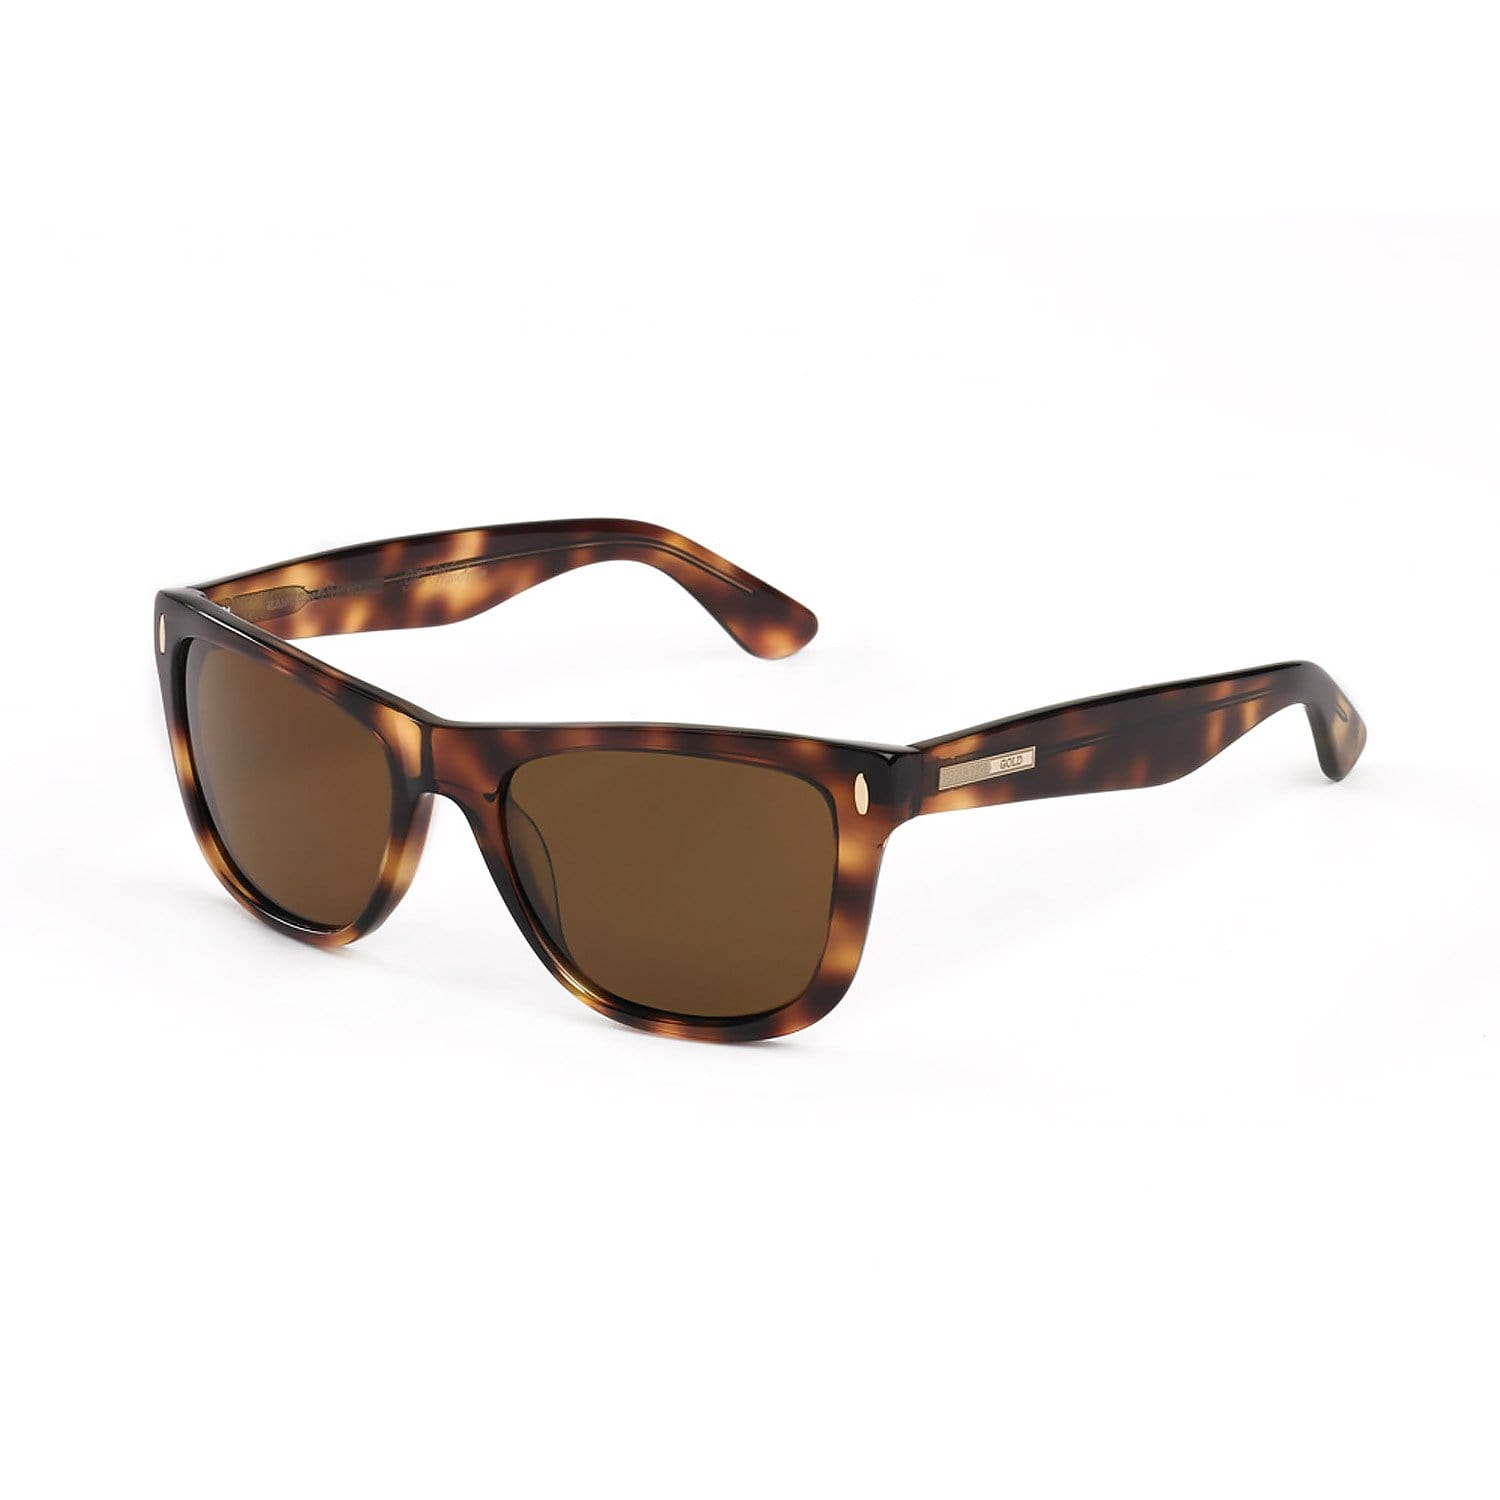 Hang Ten Gold Apparel : Eyewear - Sunglasses Hang Ten Gold The Wavefarer2-Brown Demi/Brown Lens